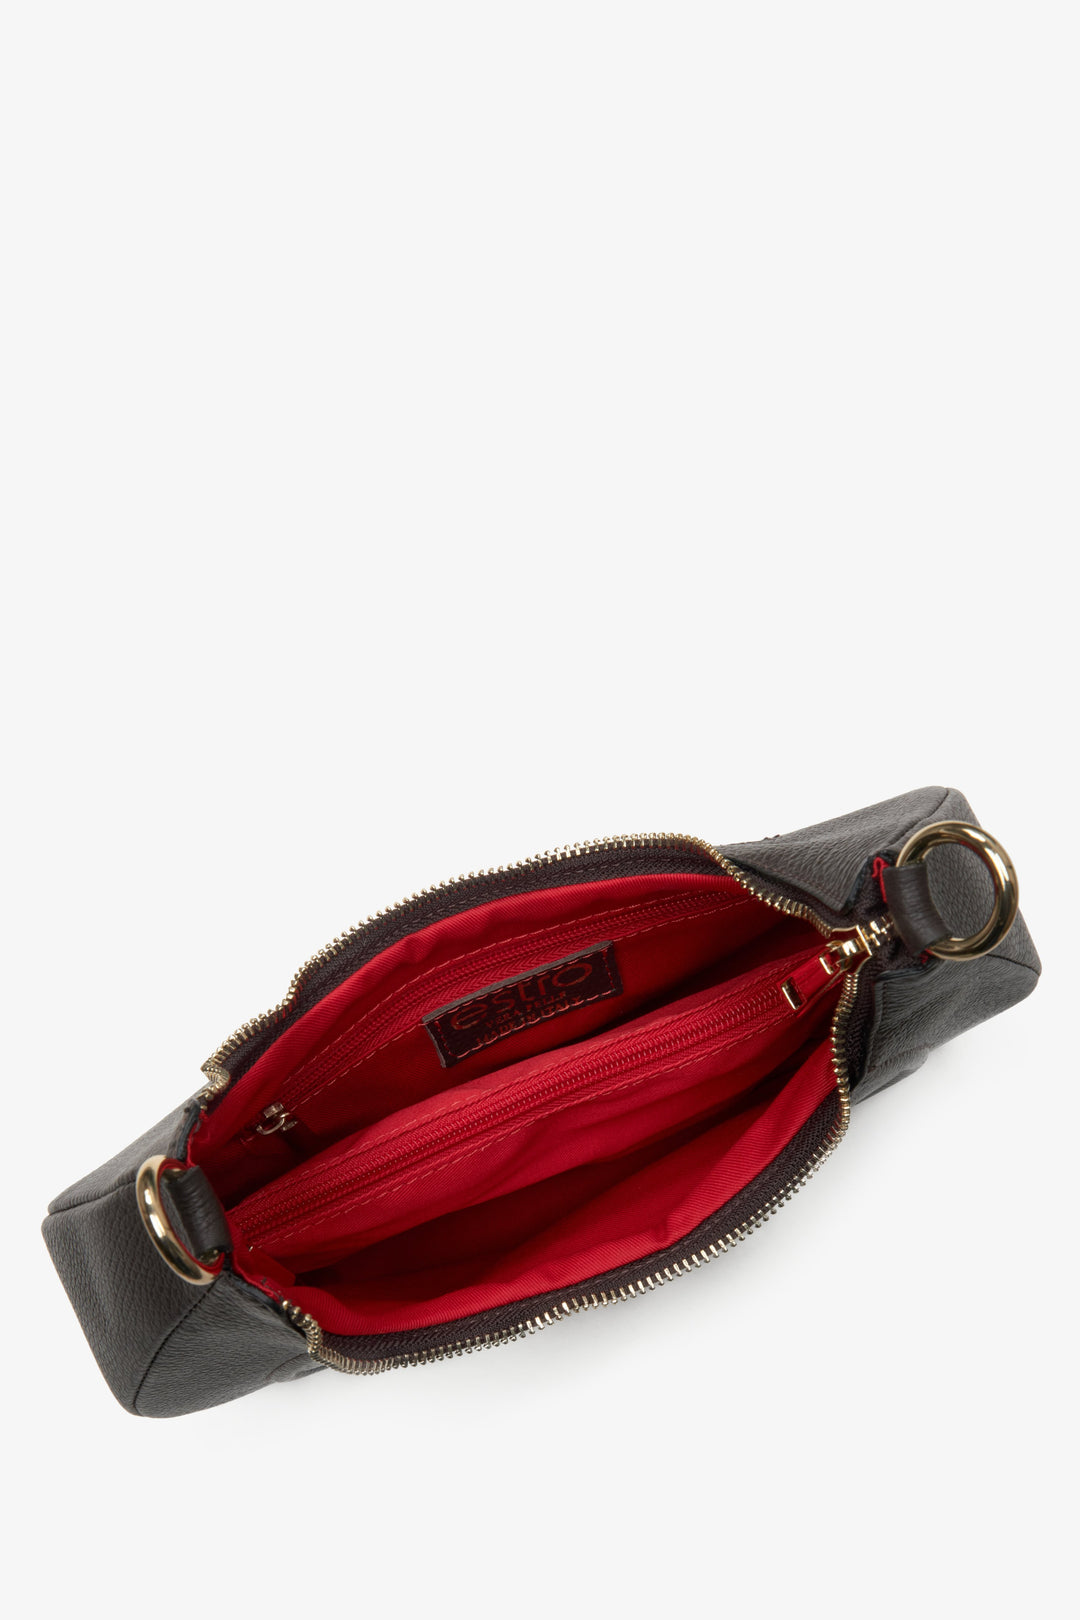 Italian leather saddle brown handbag Estro - presentation of the bag inside.